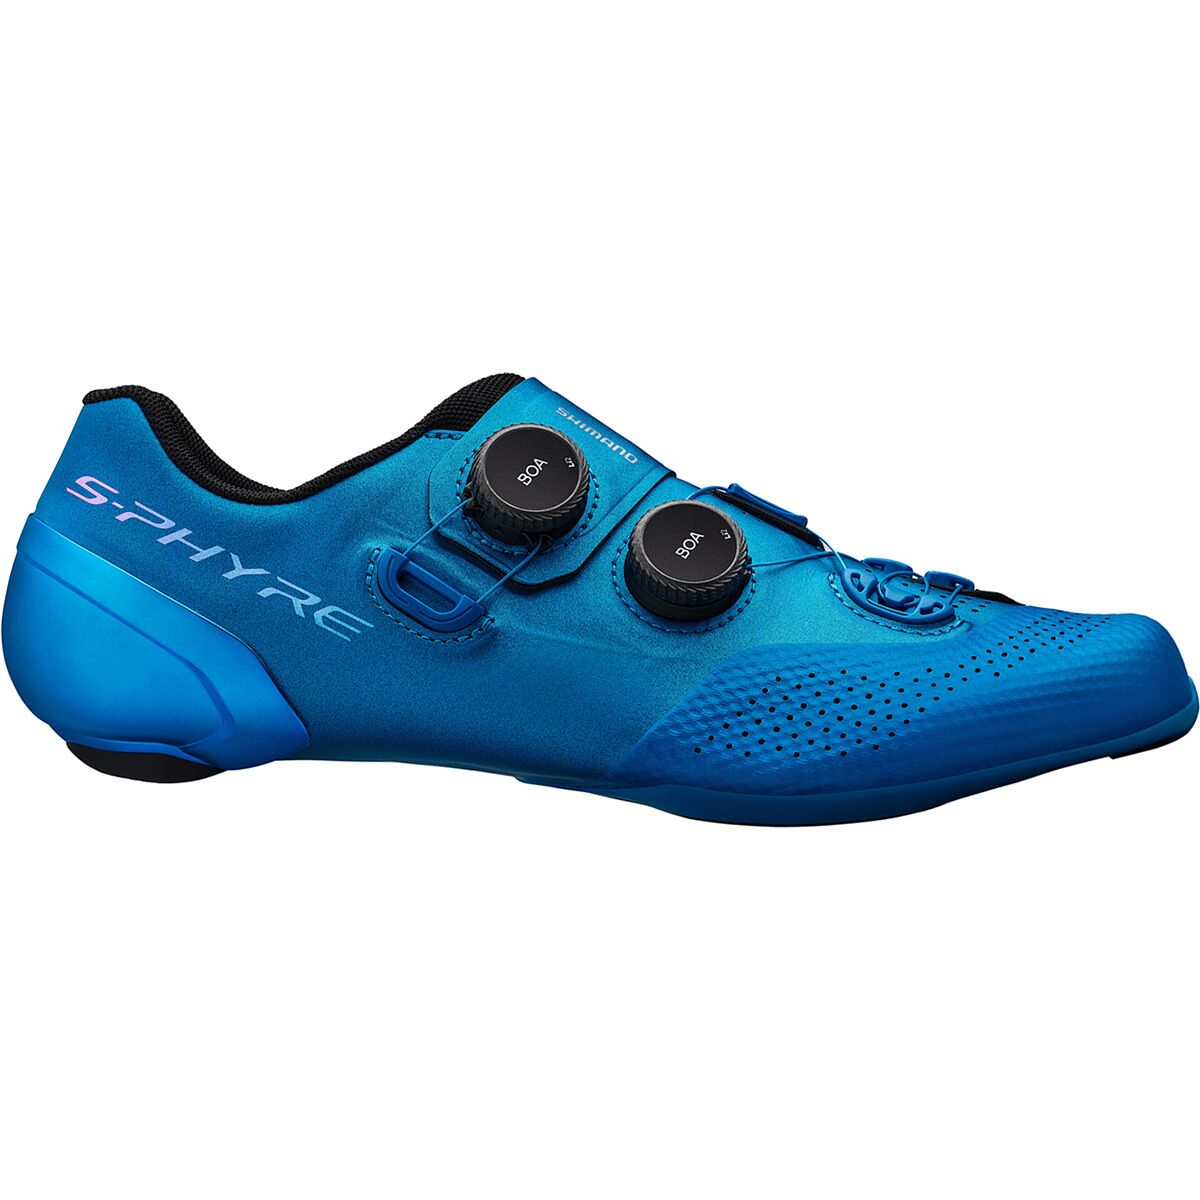 Shimano RC902 S-PHYRE Wide Cycling Shoe - Men's Blue, 40.0